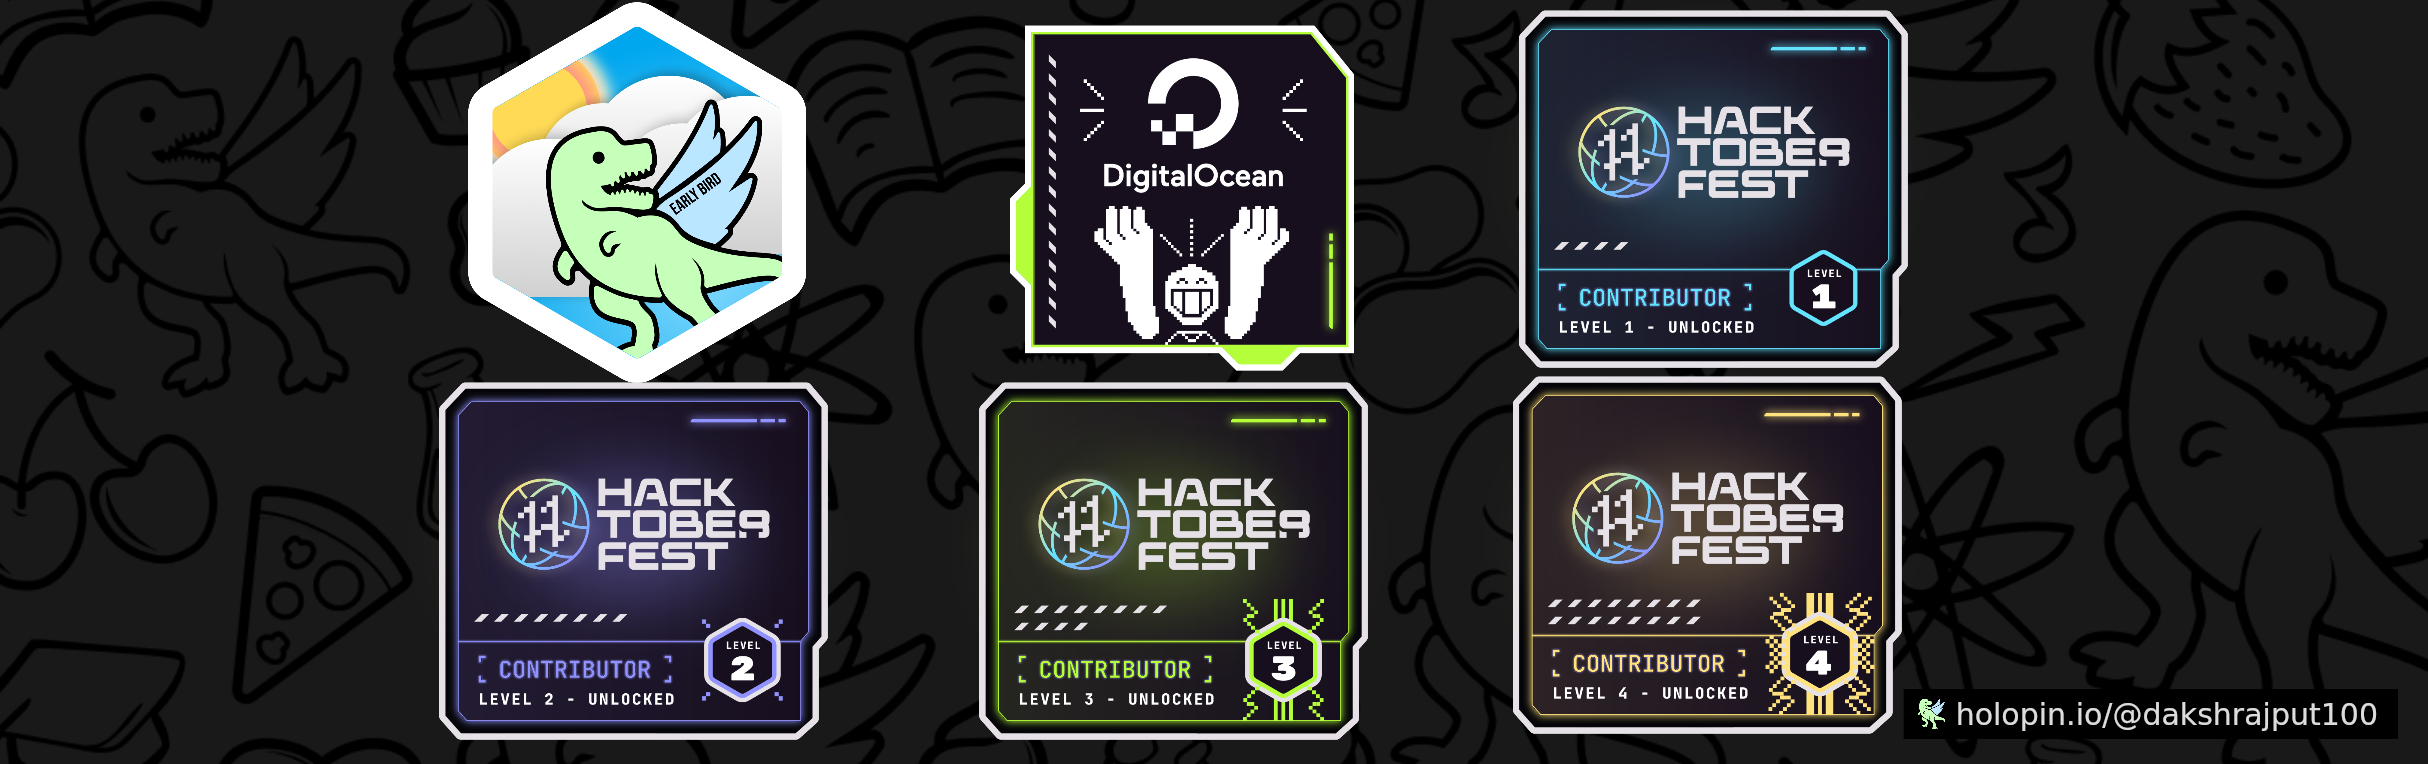 Hacktoberfest Badges